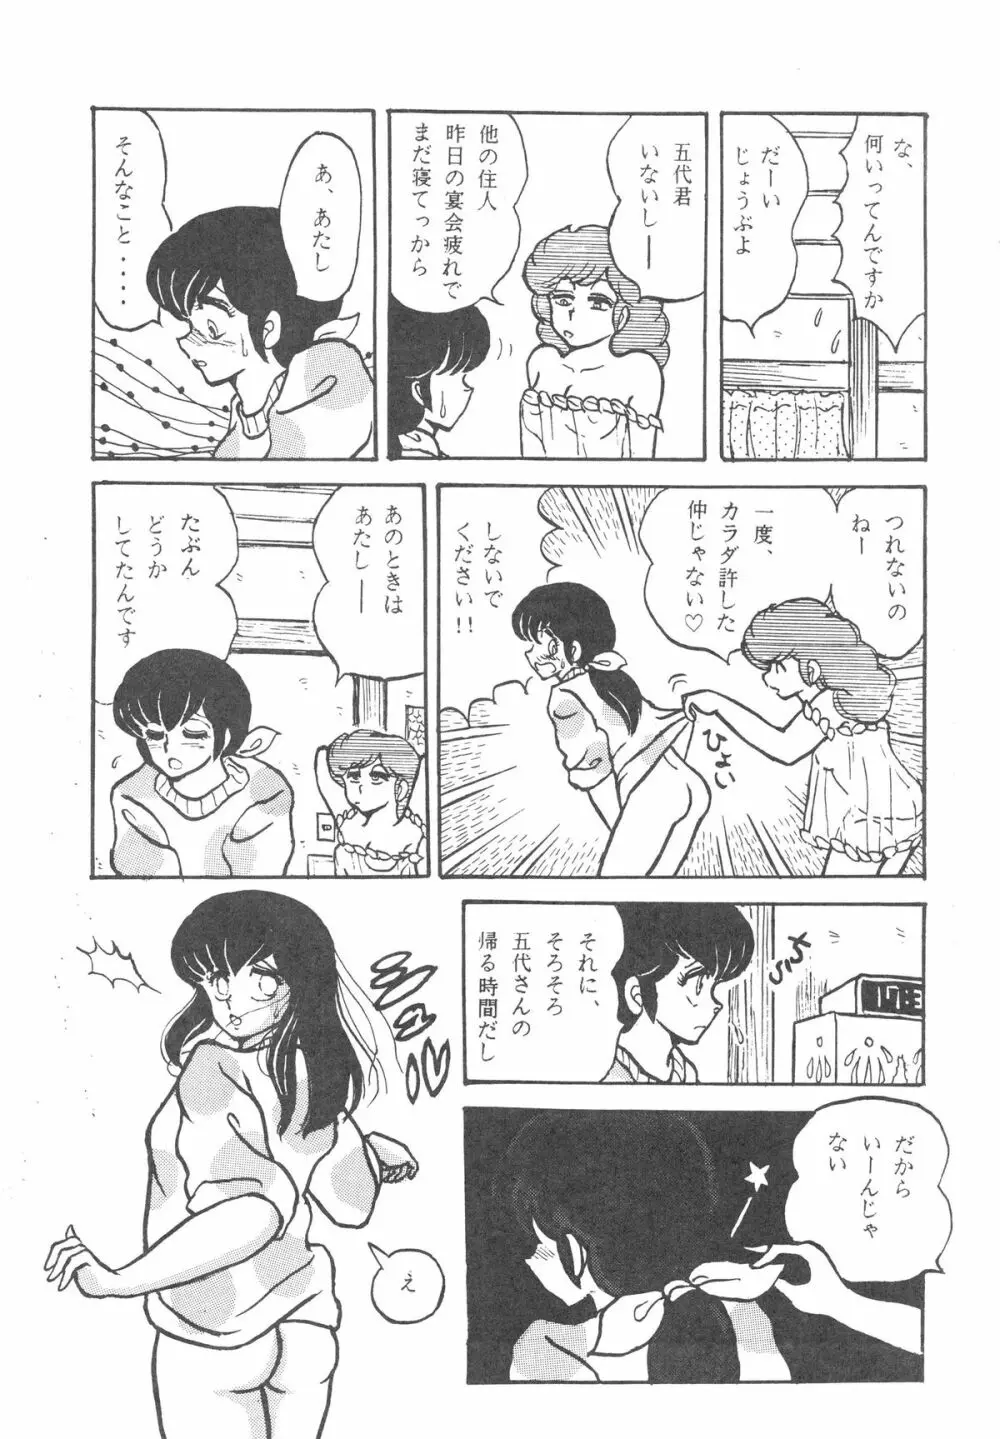 MIBOJIN GESHUKU 1 & 2 43ページ